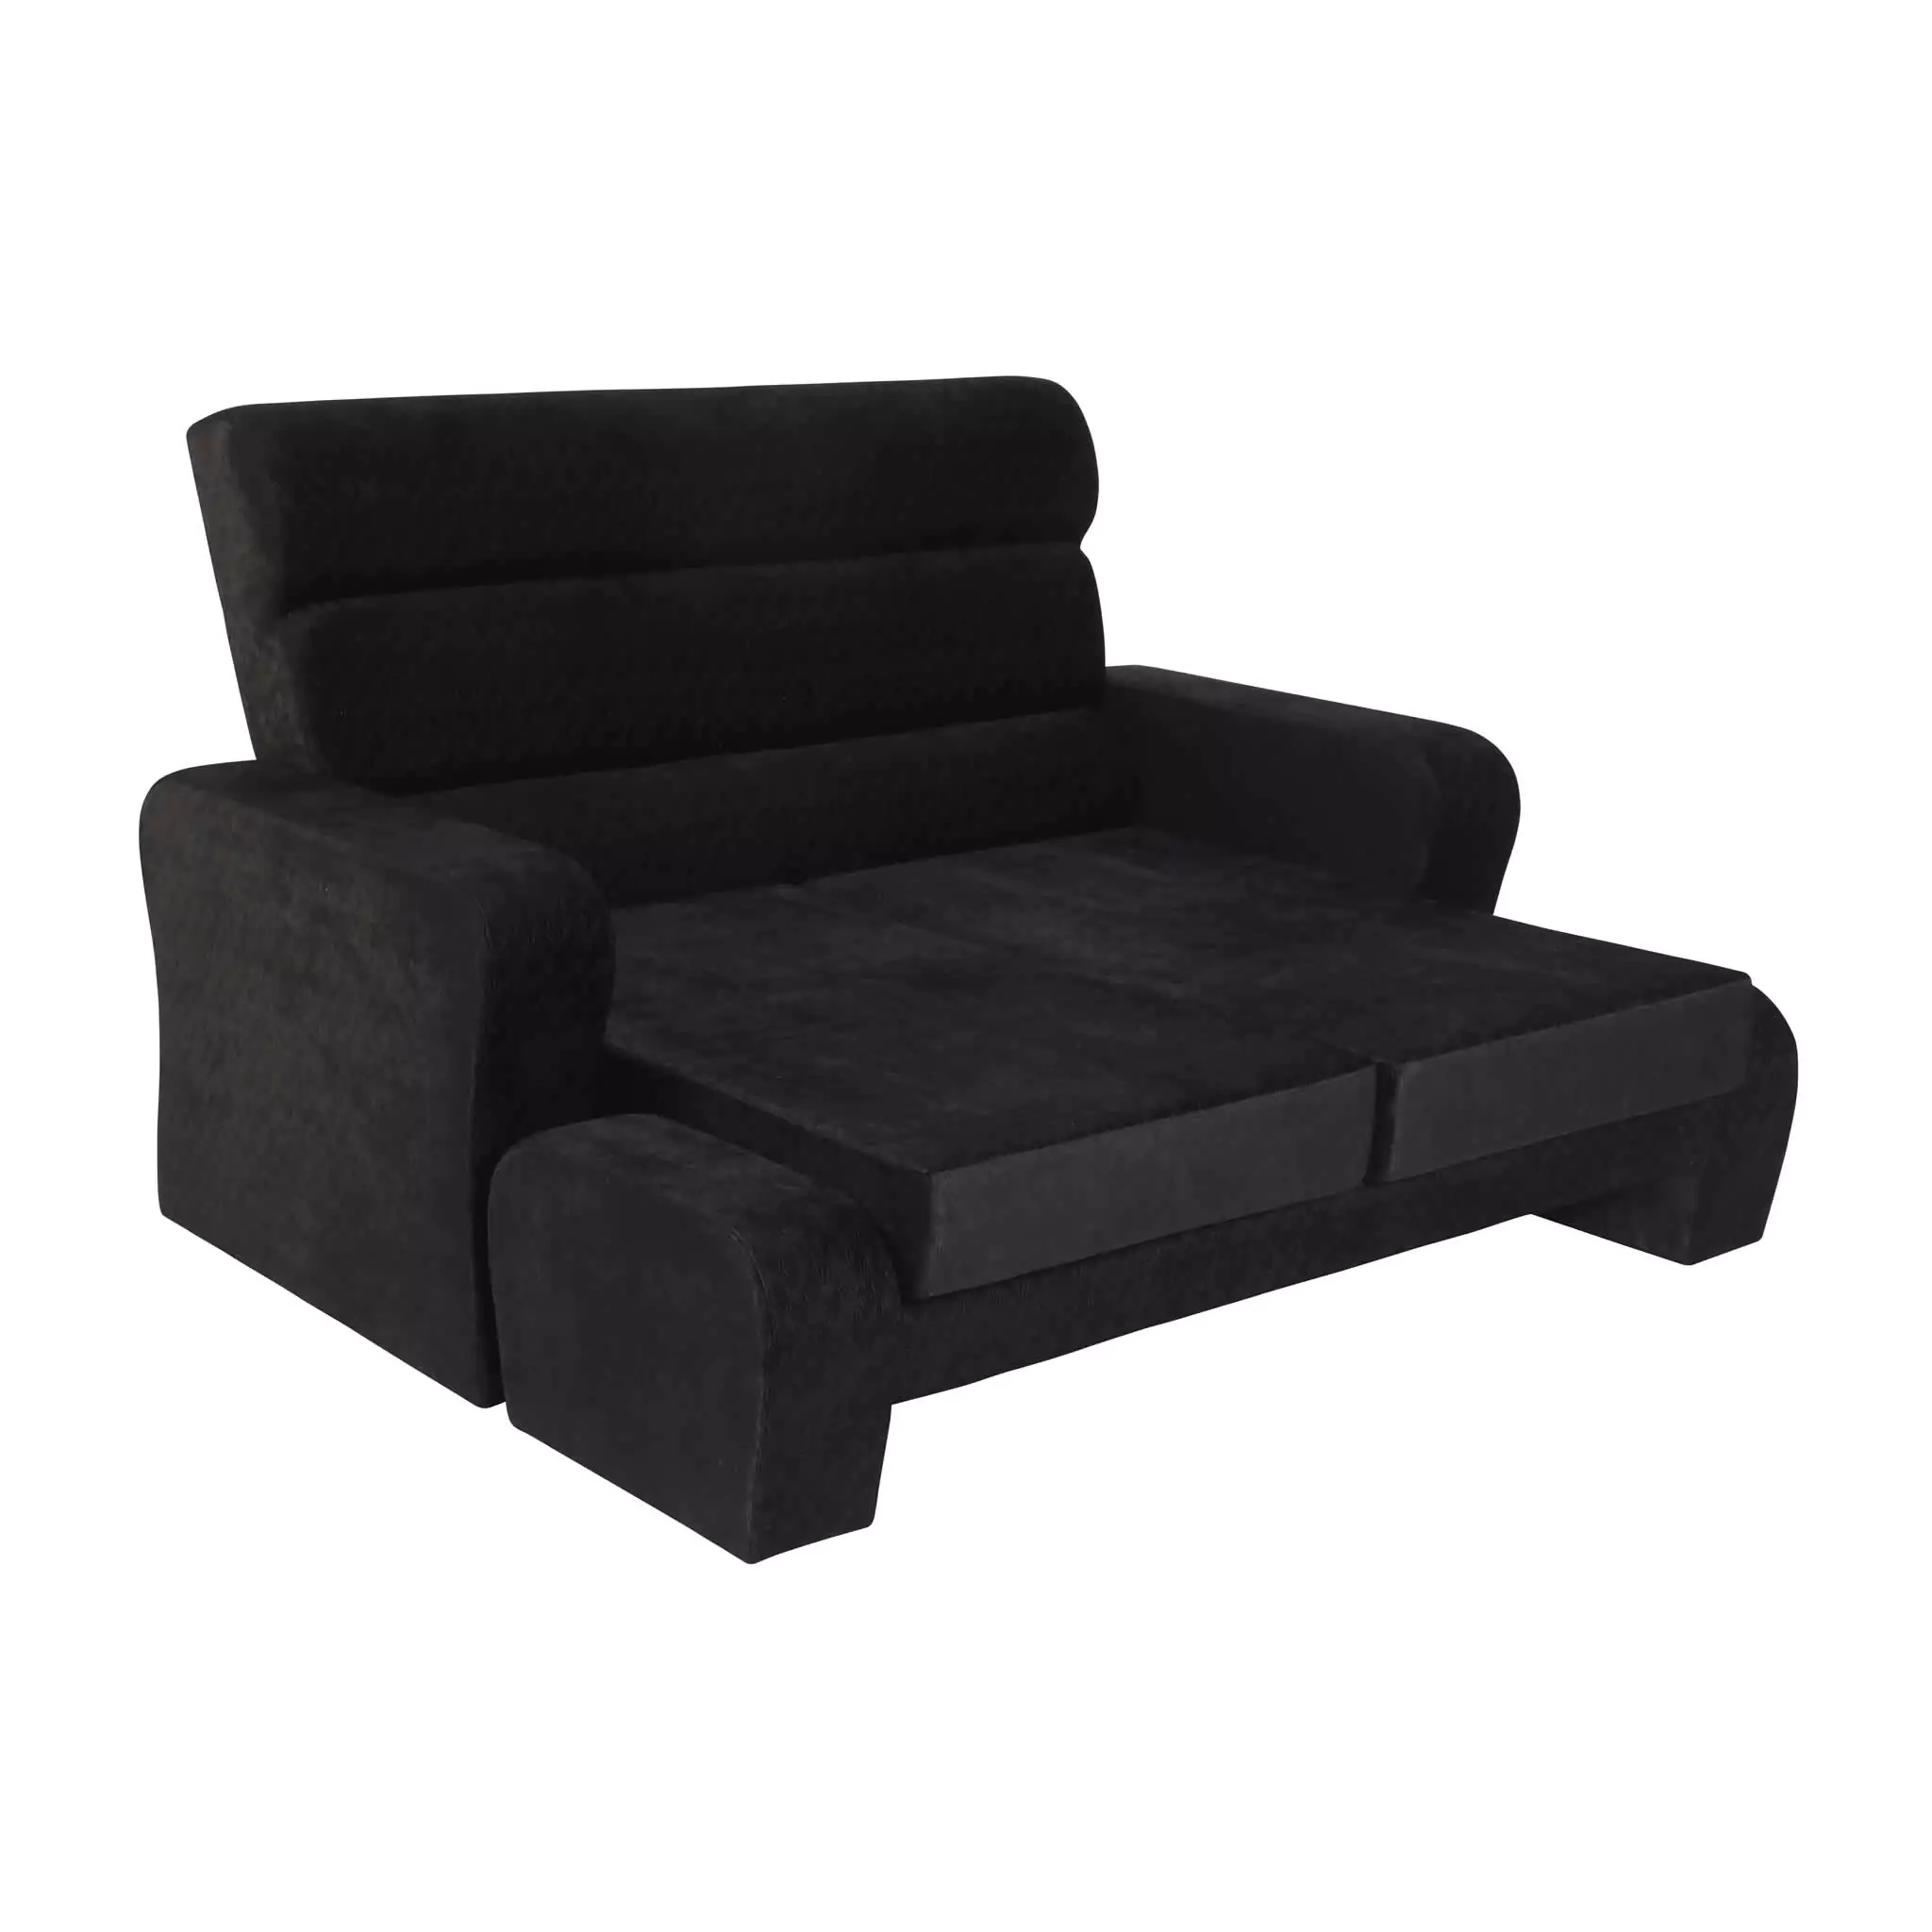 Sofa Model: VIP 01 / 02